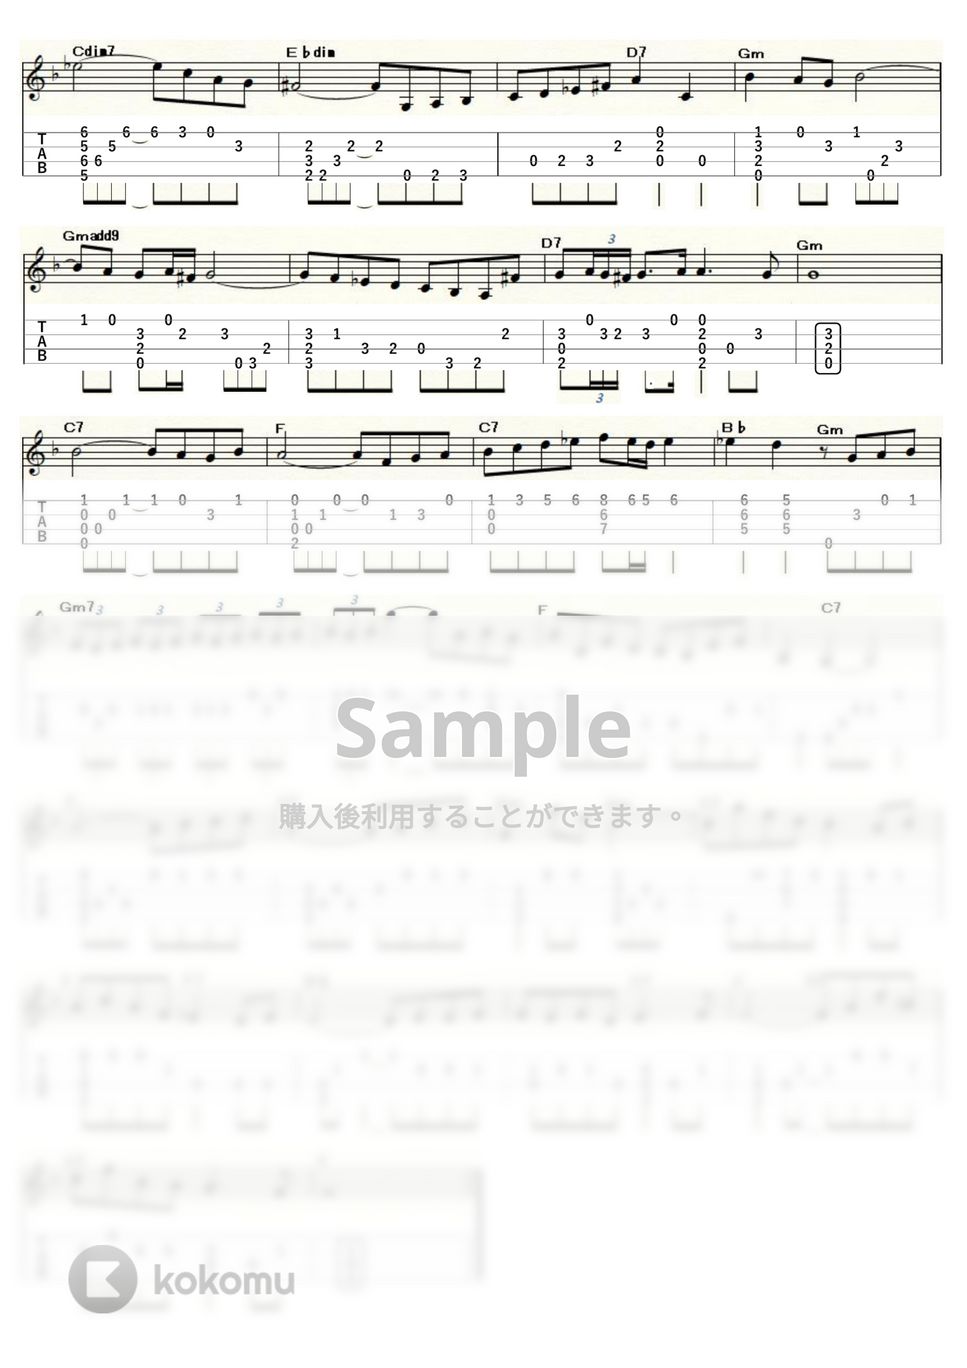 J.S.バッハ - バッハのアリオーソ～チェンバロ協奏曲第５番第2楽章～ (ｳｸﾚﾚｿﾛ / Low-G / 中級) by ukulelepapa